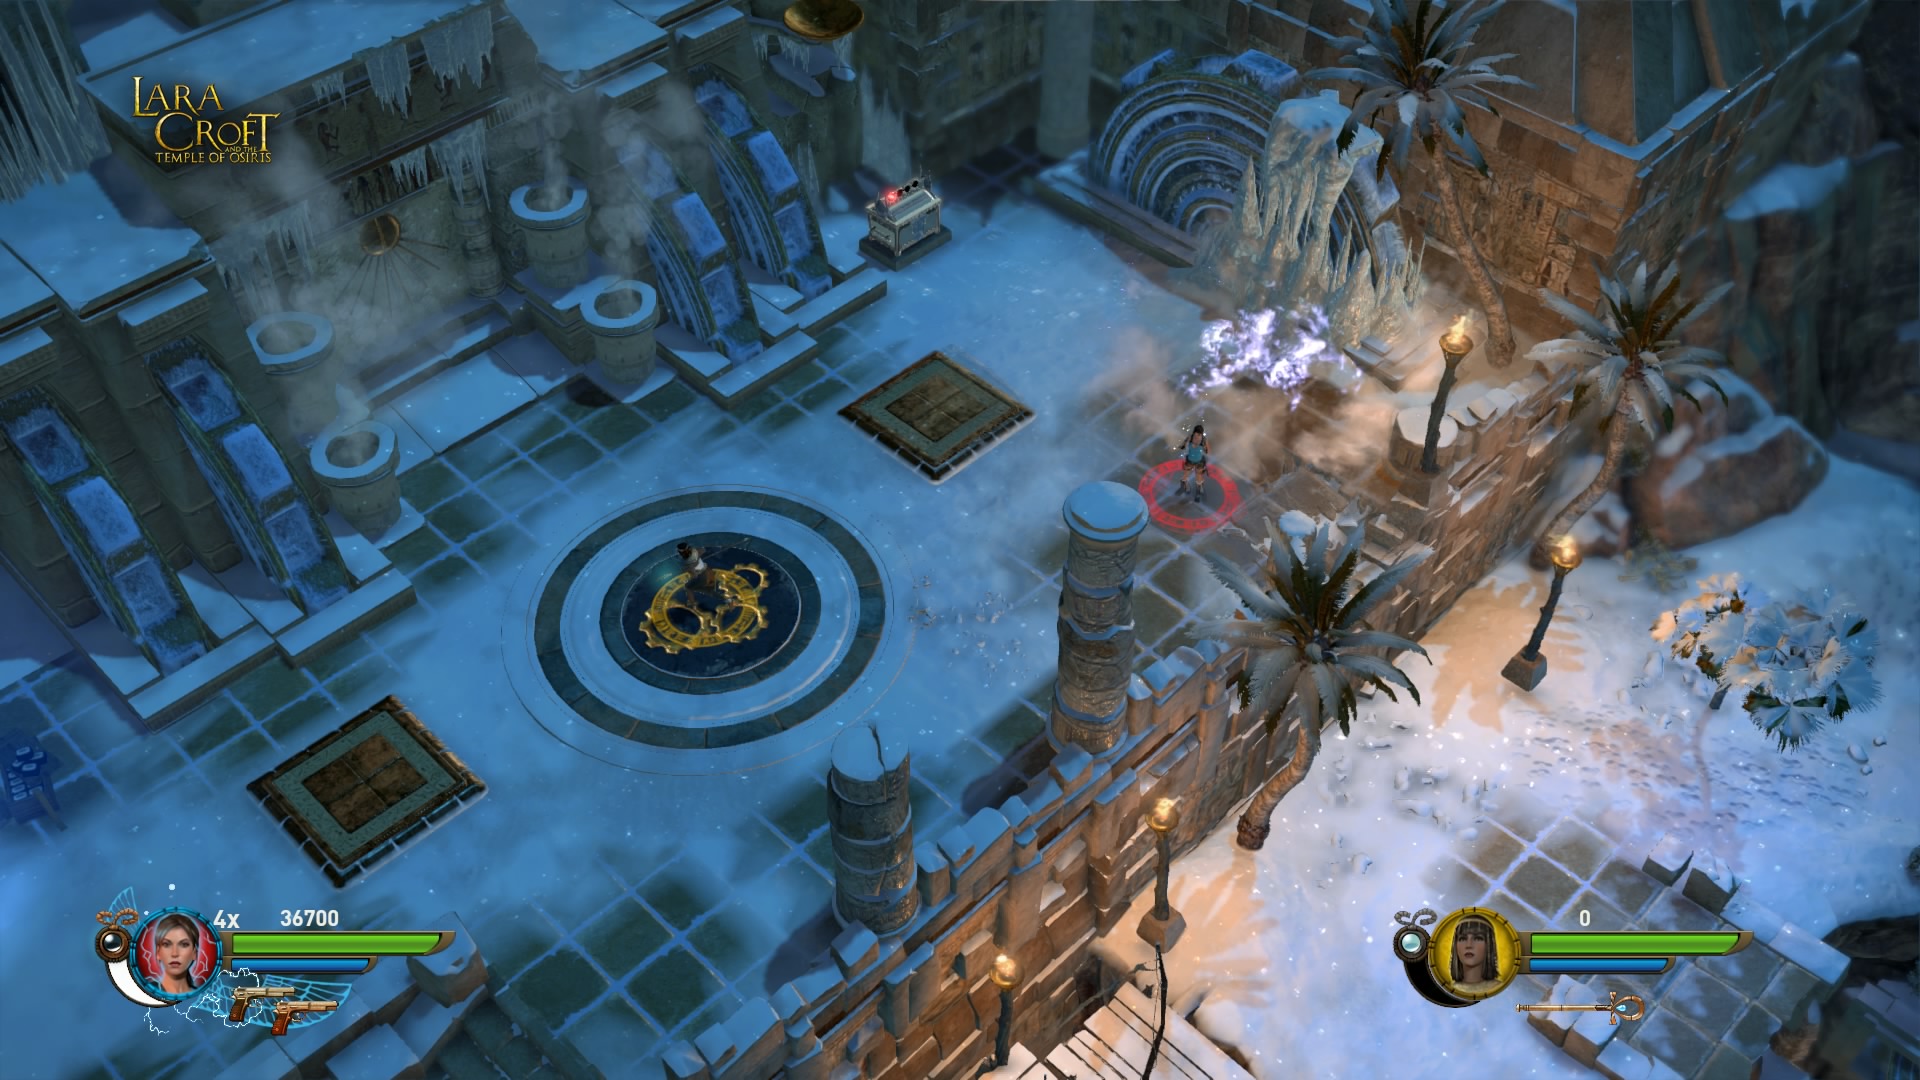 Lara Croft and the Temple of Osiris zdarma na Steamu